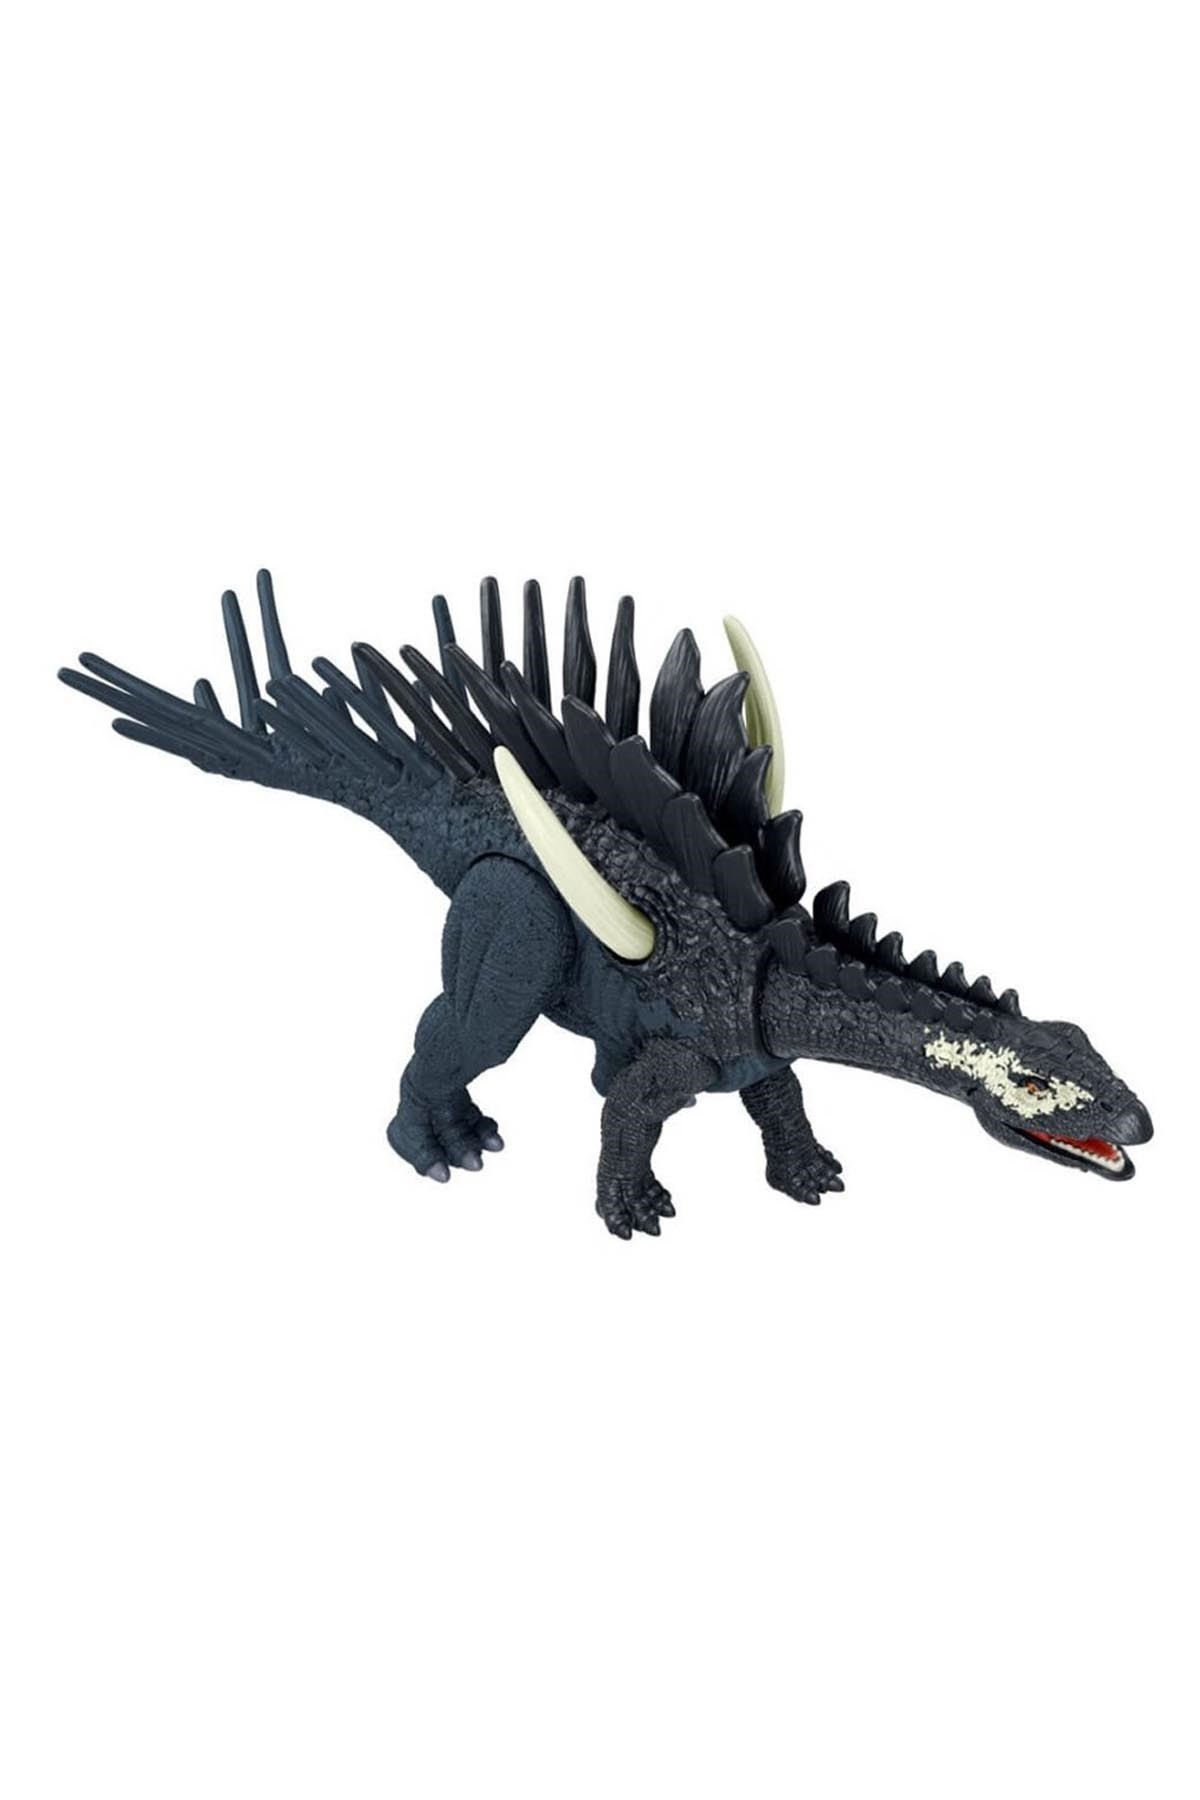 Jurassic World Tehlikeli Dinozor Figürü HDX23